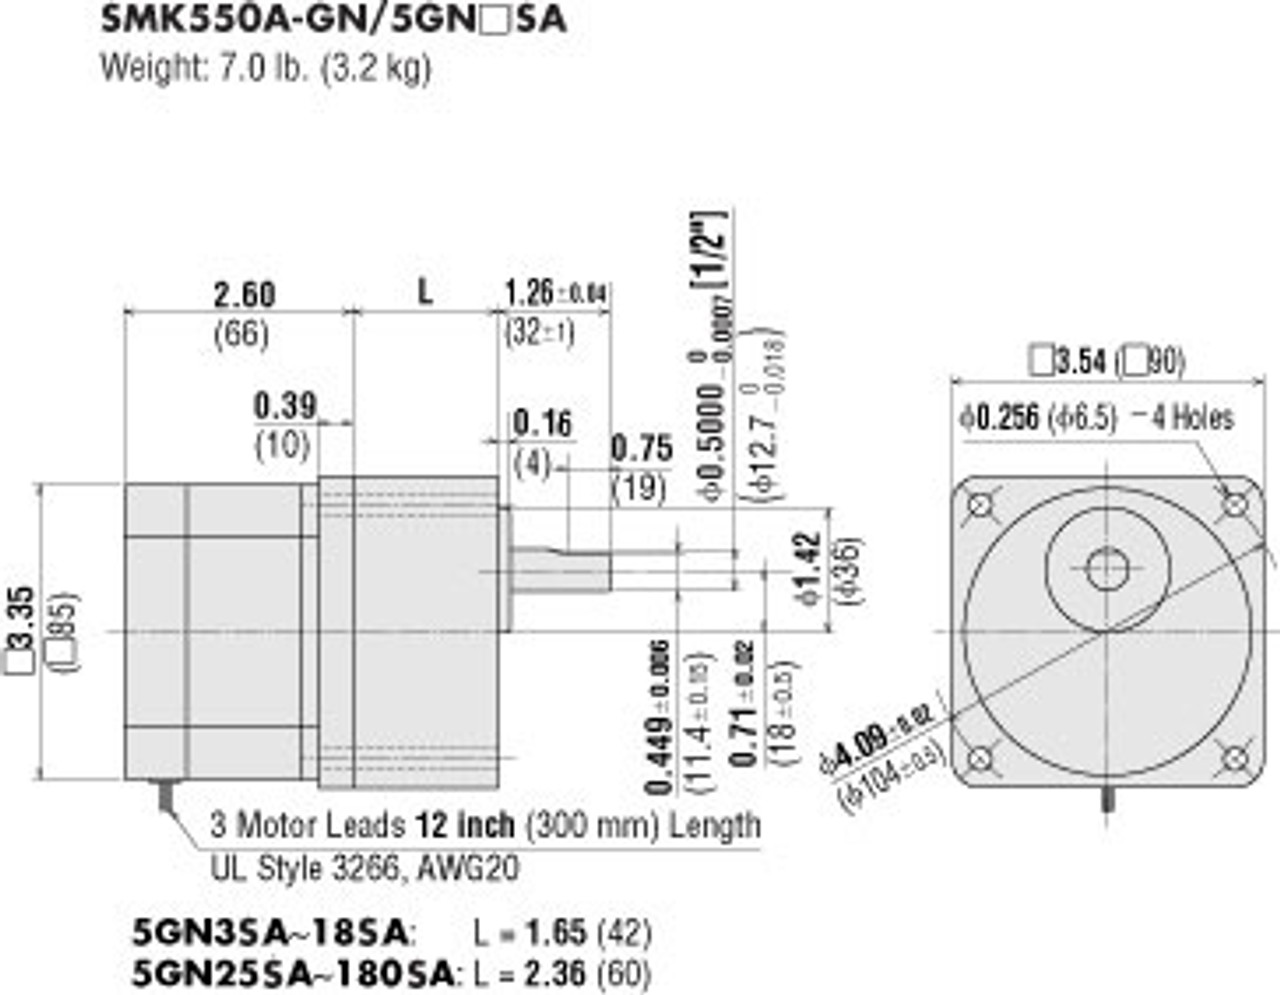 SMK550A-GN / 5GN180SA - Dimensions